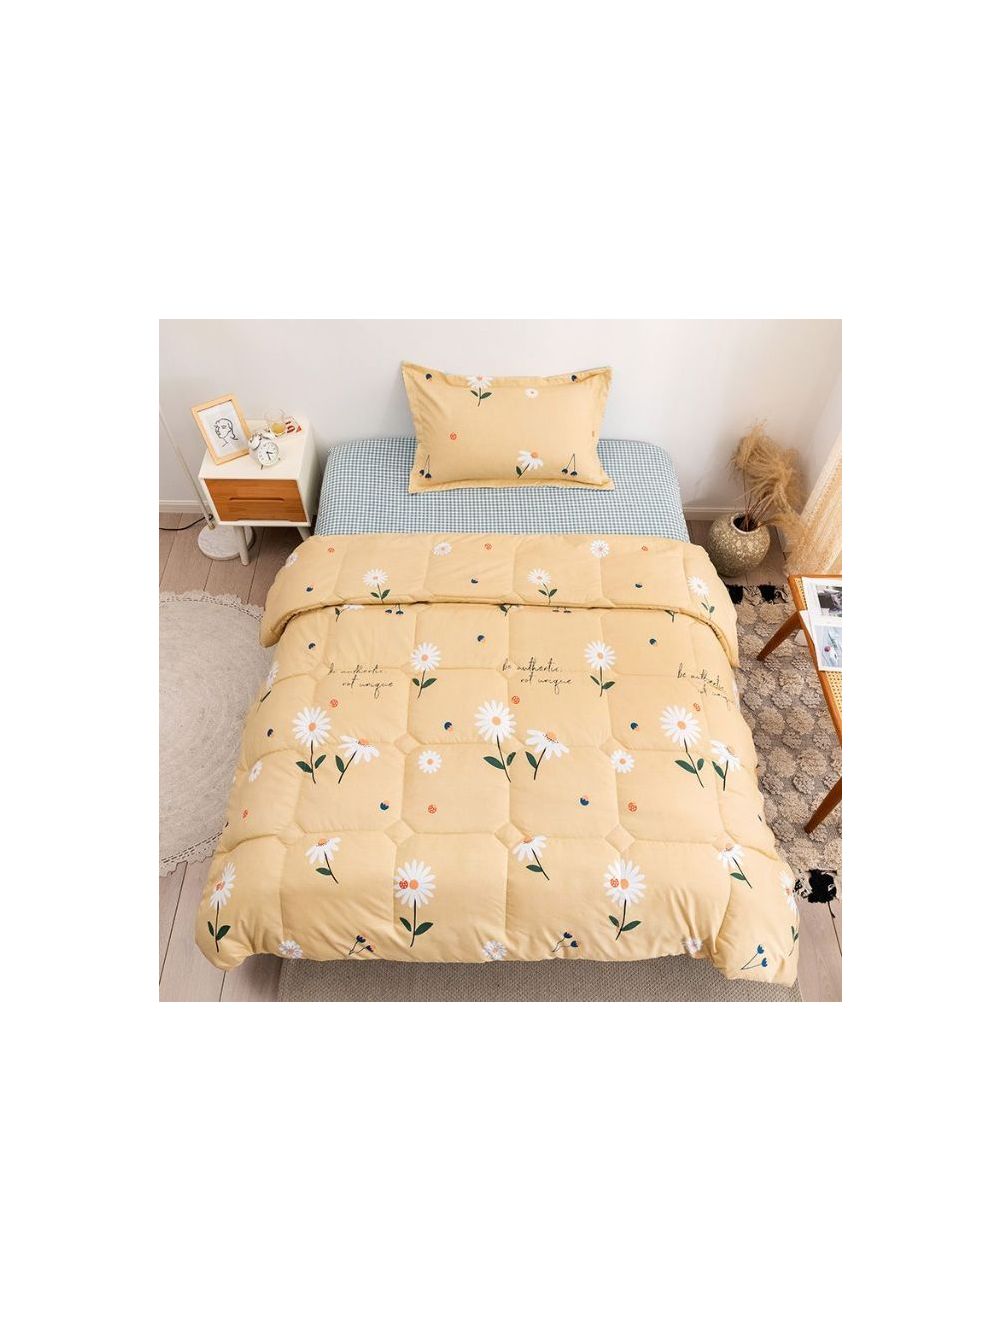 Rishahome 3 Piece Single Size Comforter Set Microfiber Gold 150x200cm-HGOCS0003